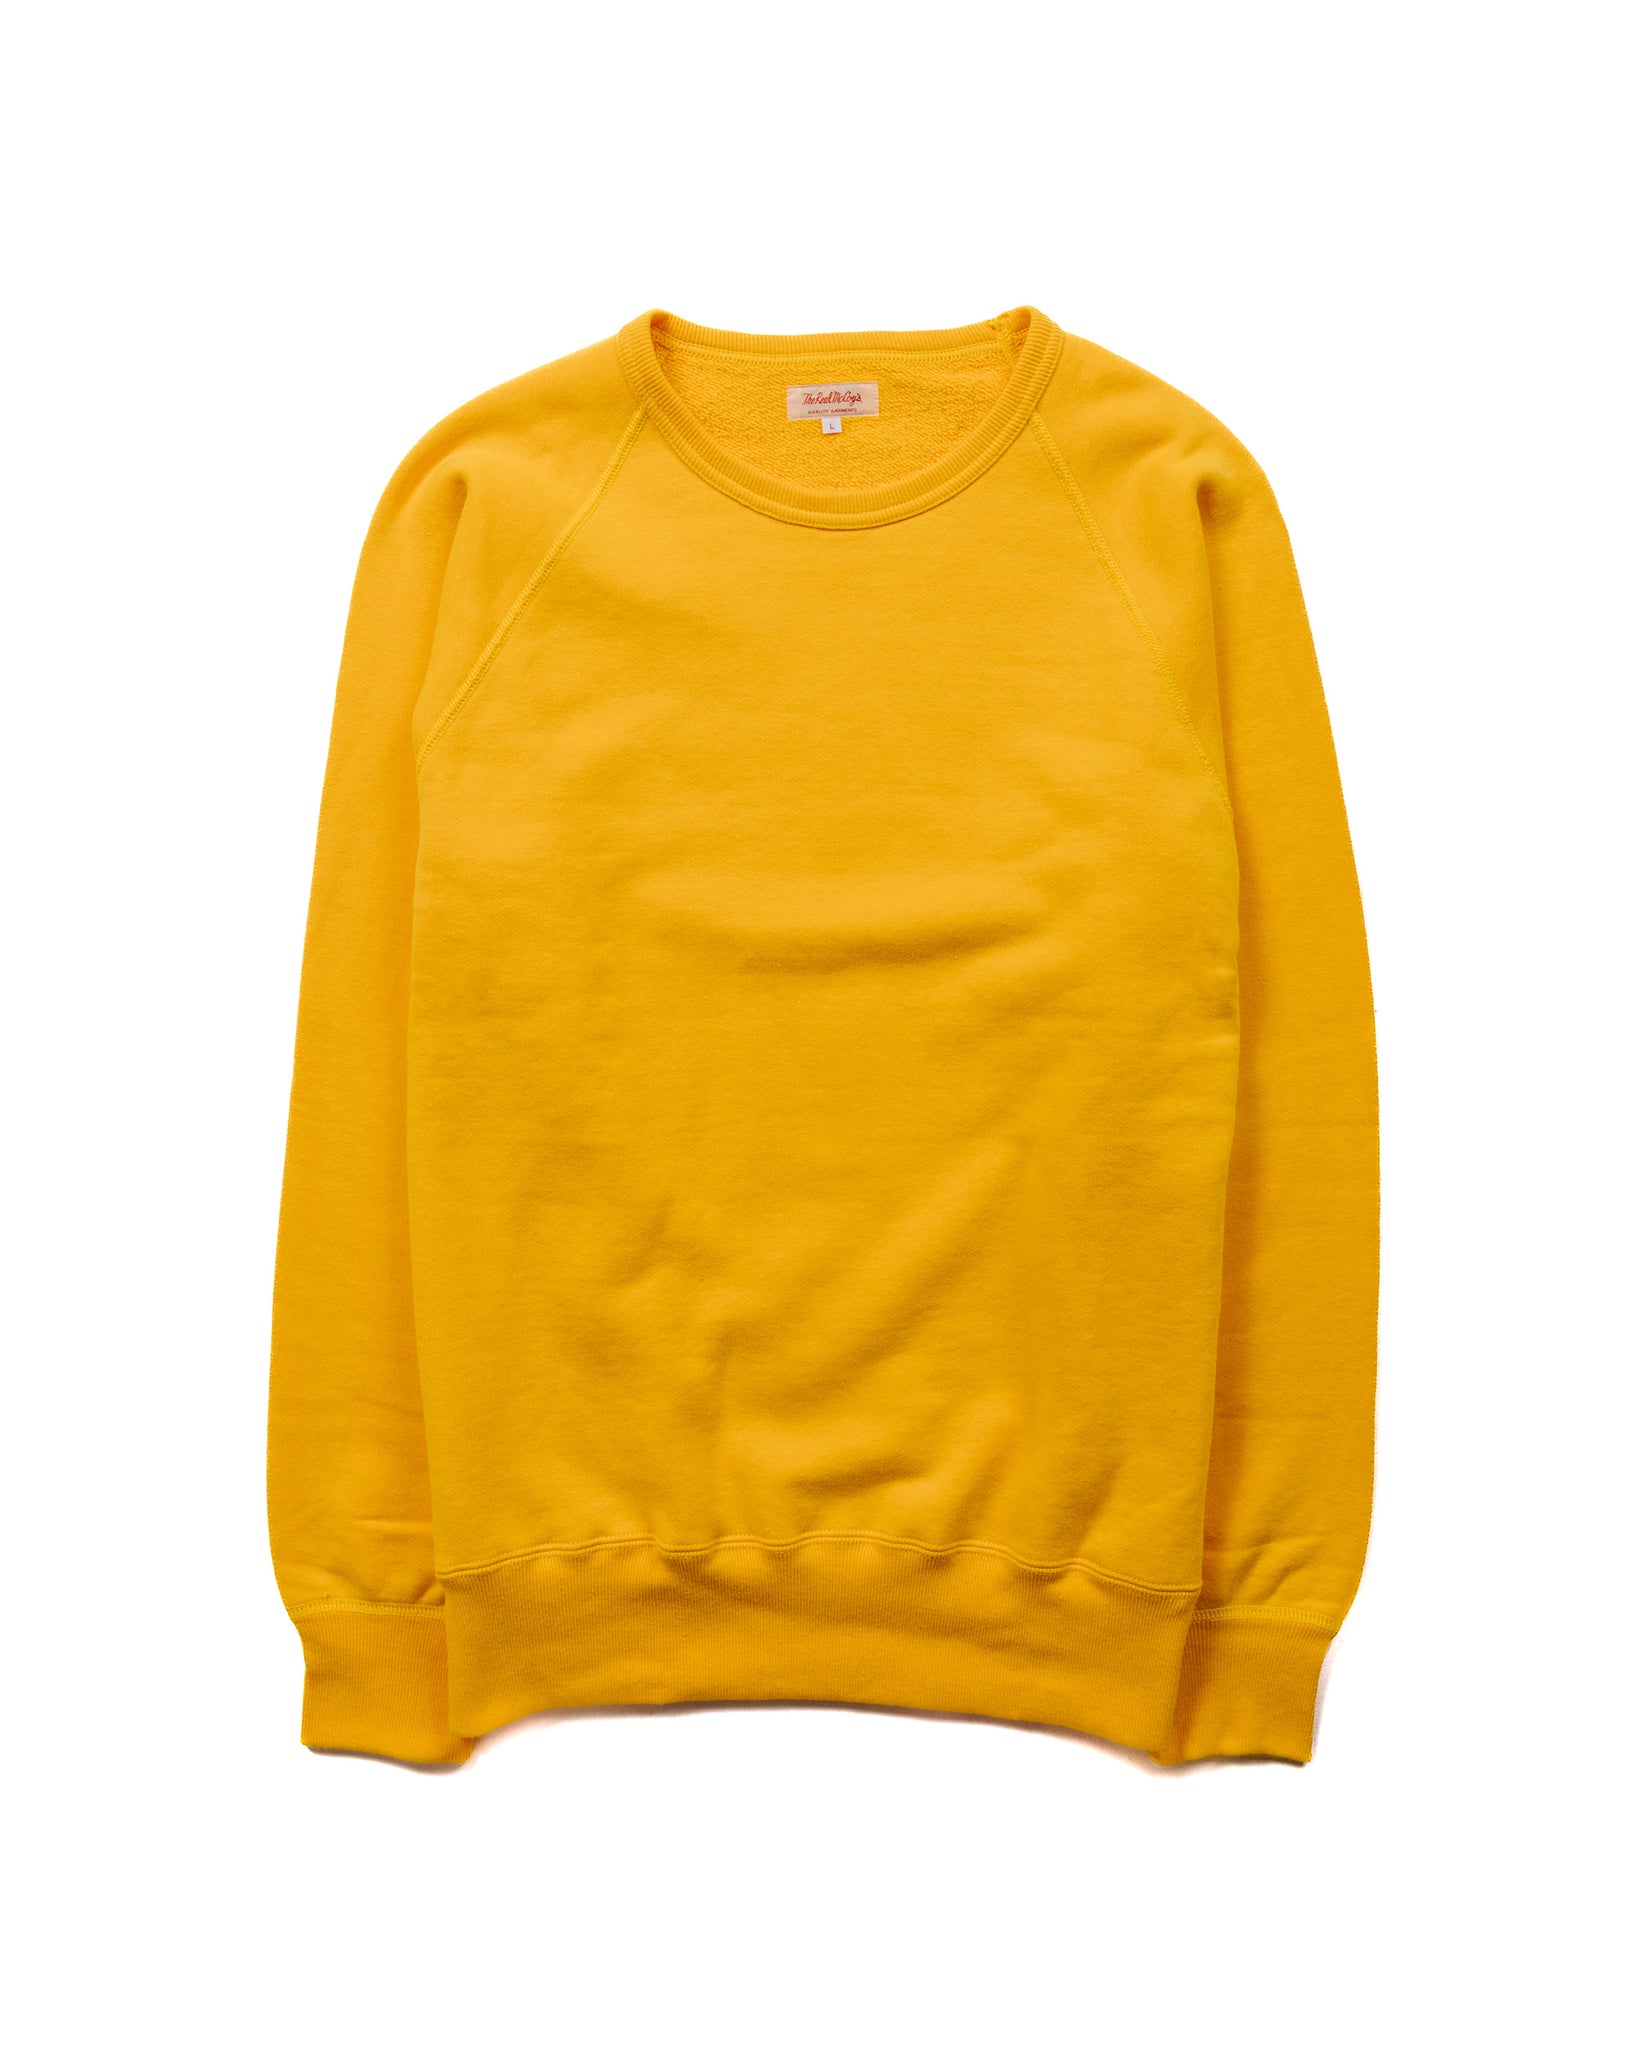 The Real McCoy's MC21018 9oz. Loopwheel Raglan Sleeve Sweatshirt Yellow